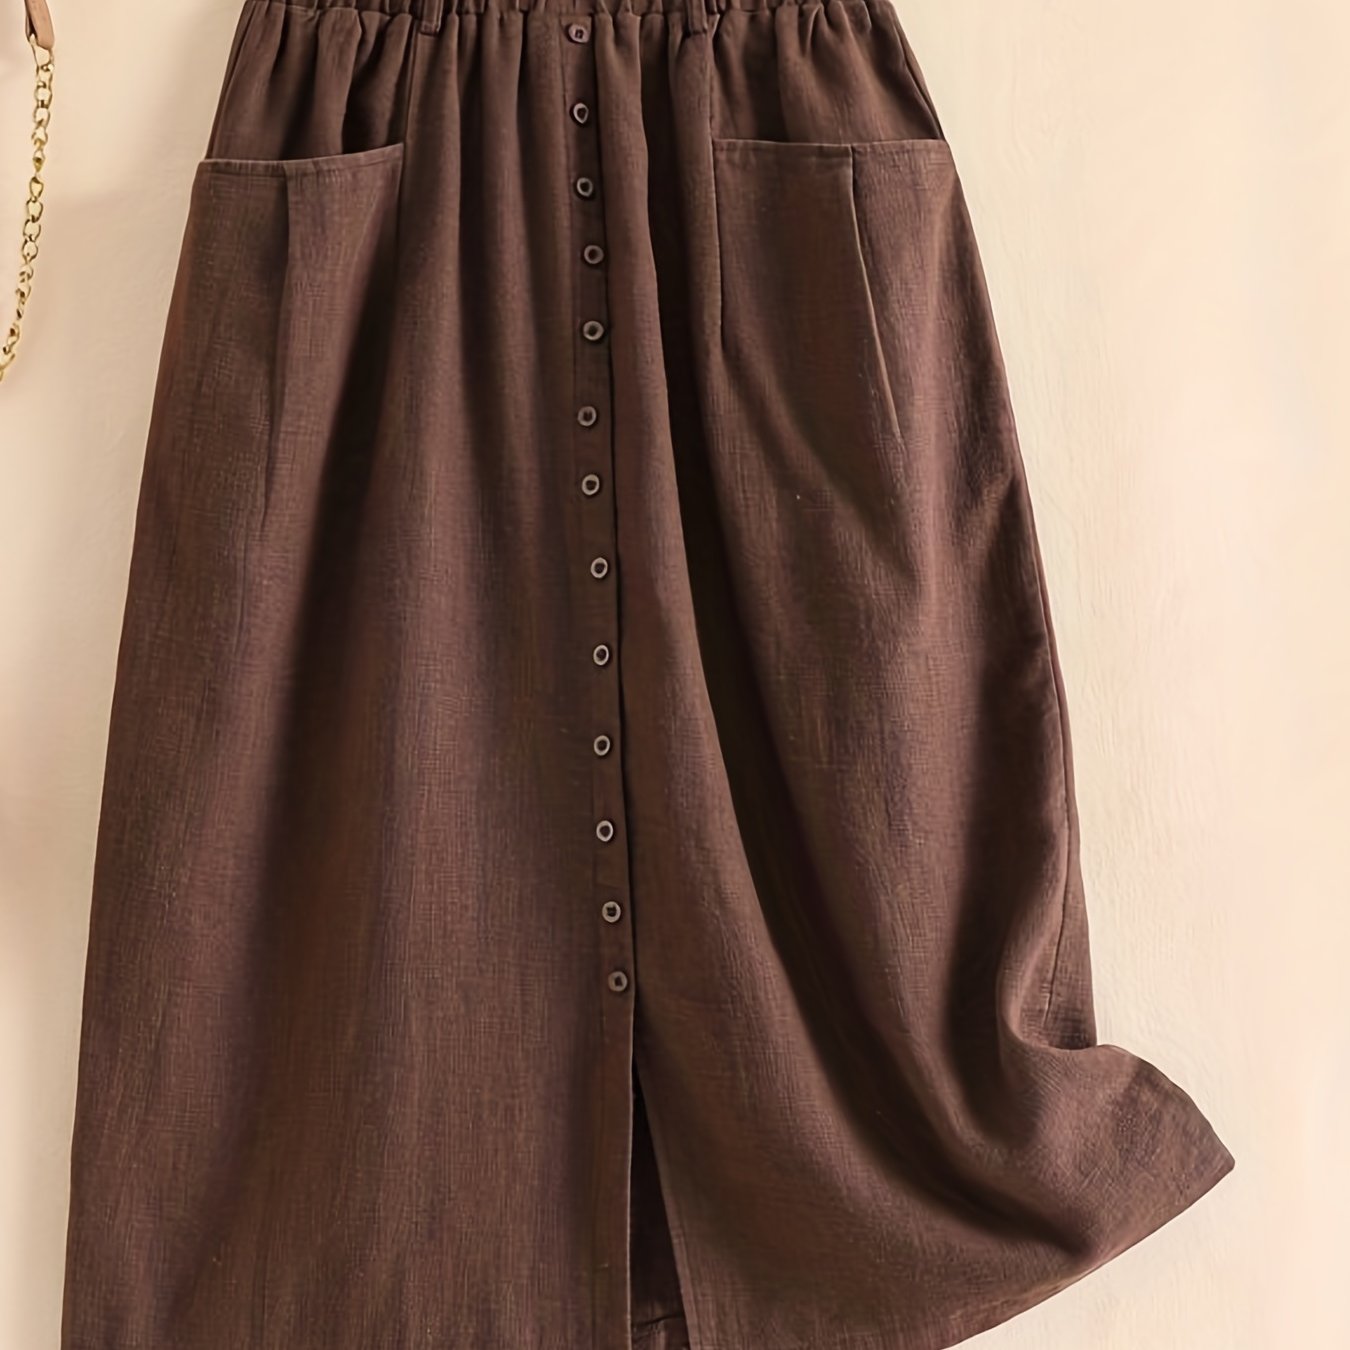 Solid Elastic Waist Button Cotton Skirt, Vintage Pocket Midi Skirt For Spring & Fall, Women's Clothing